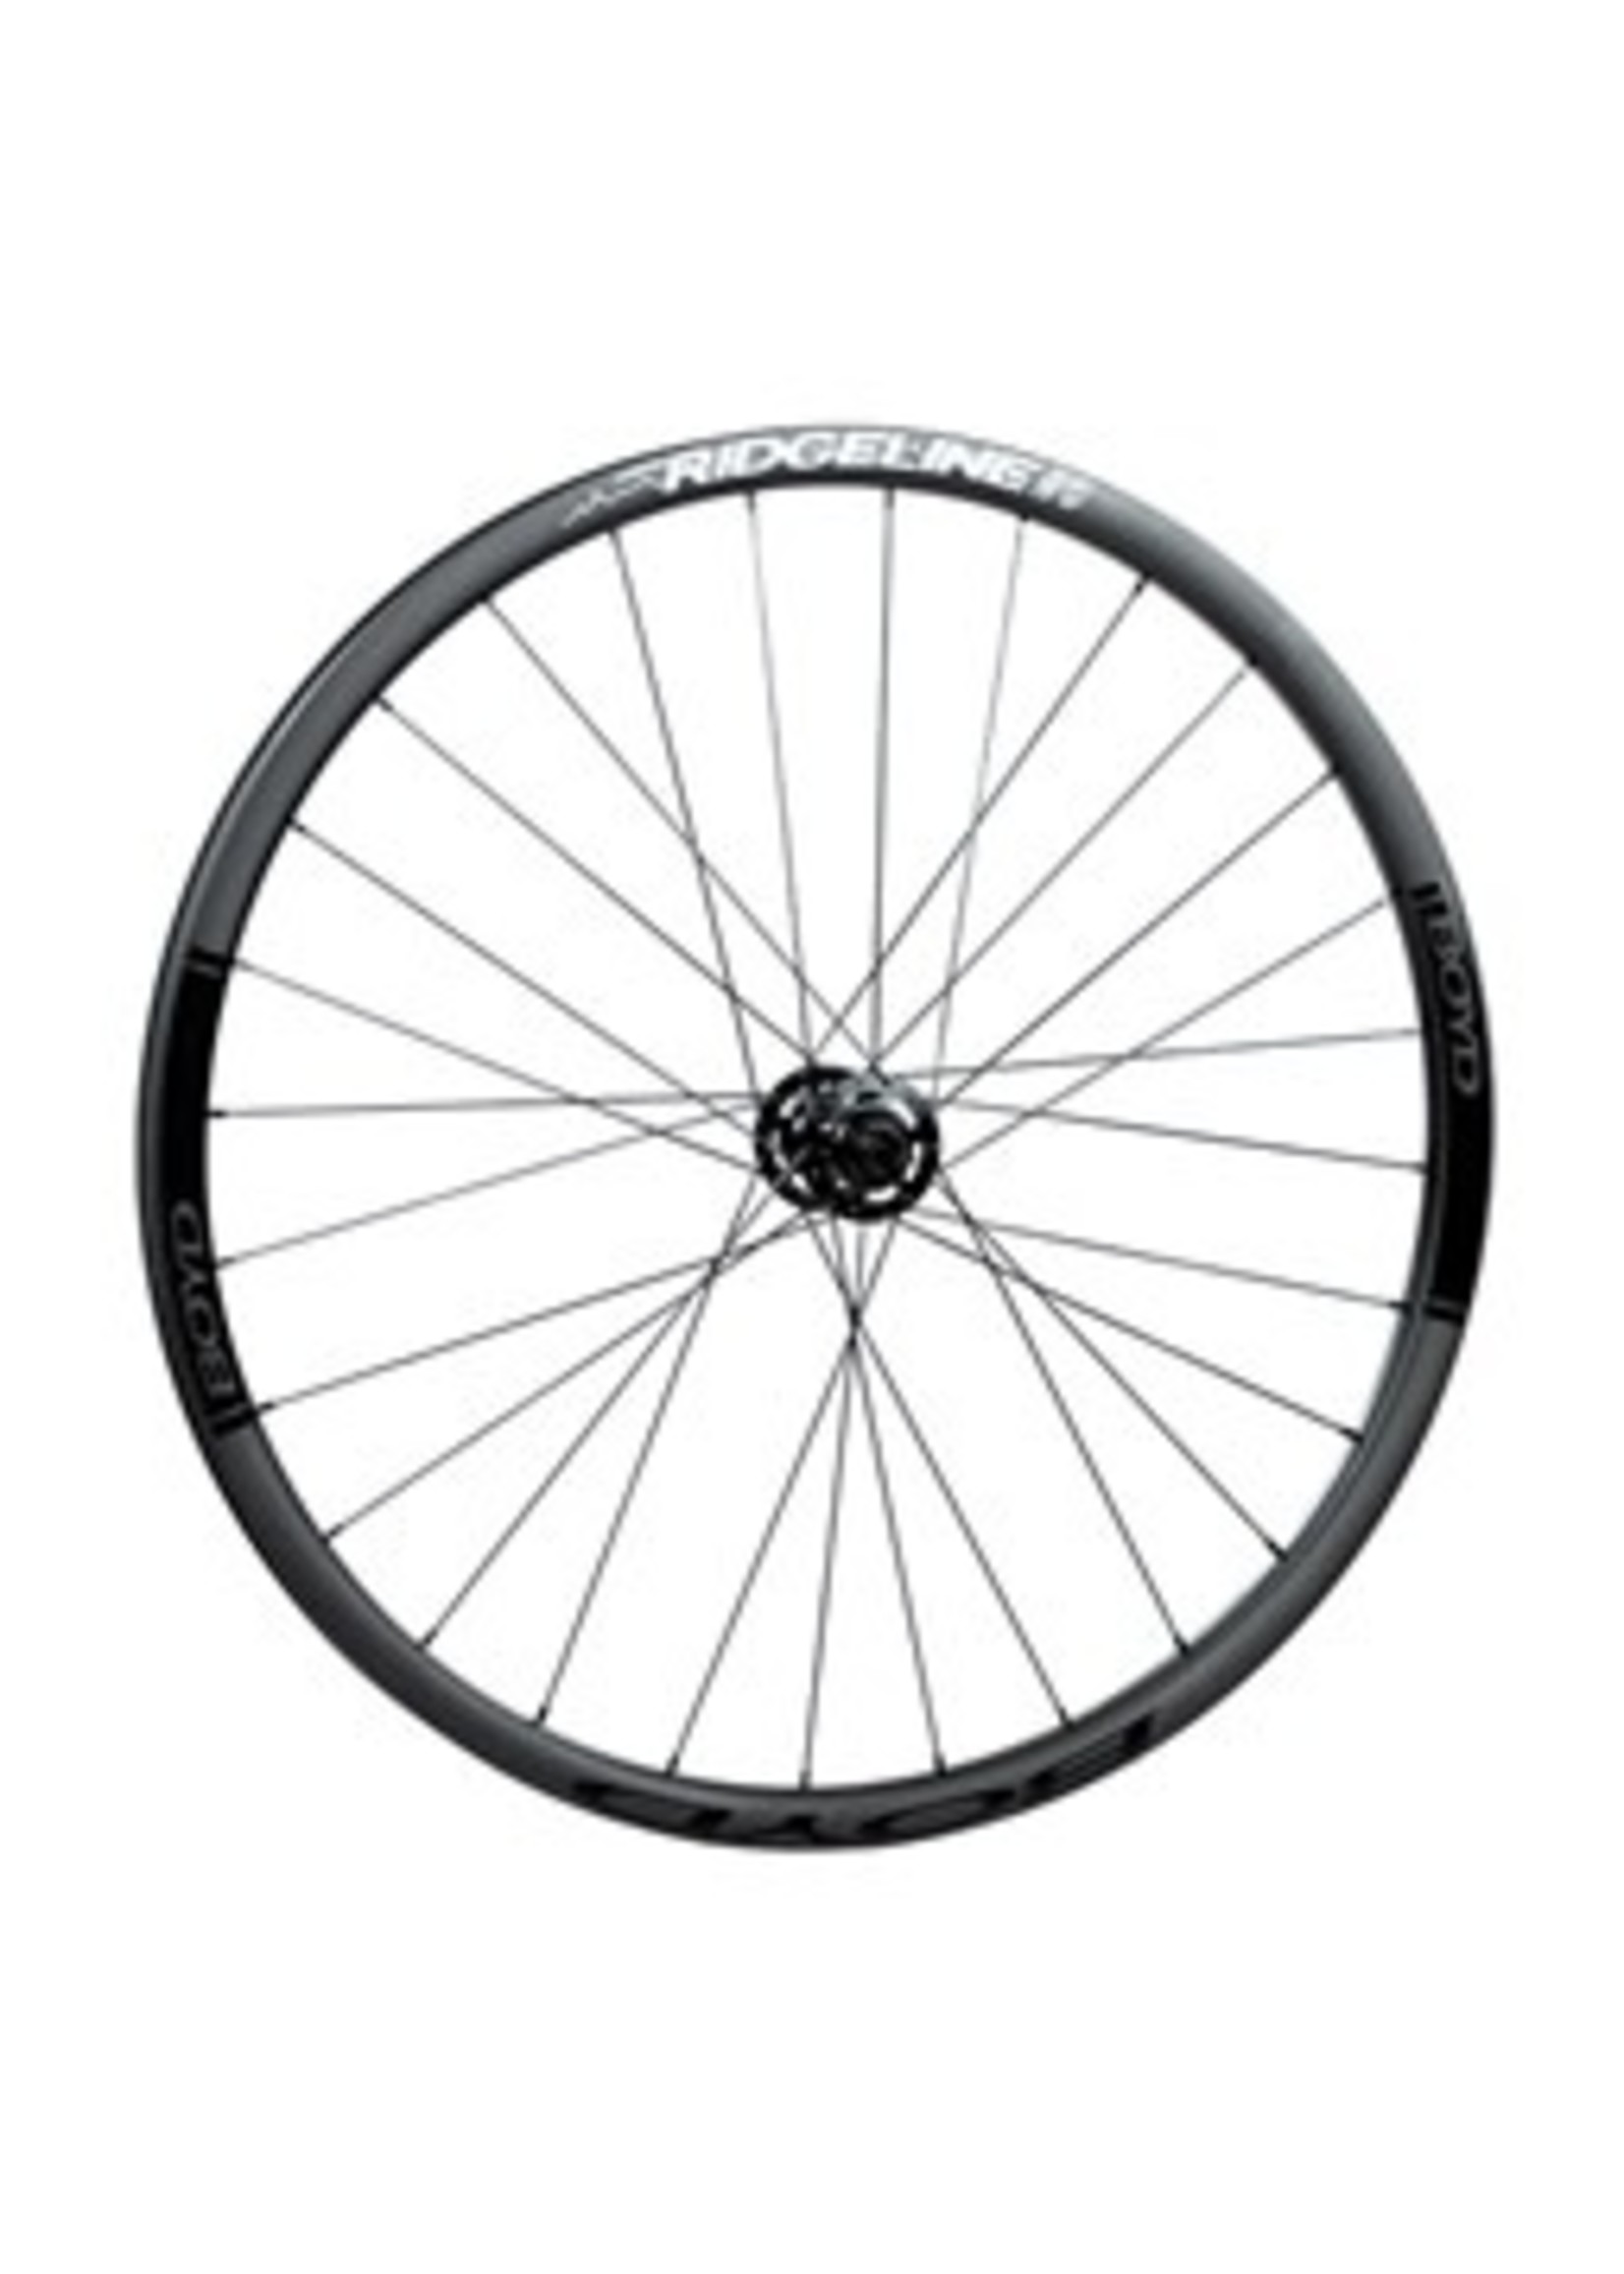 Boyd Cycling Ridgeline 29er Carbon Front Wheel